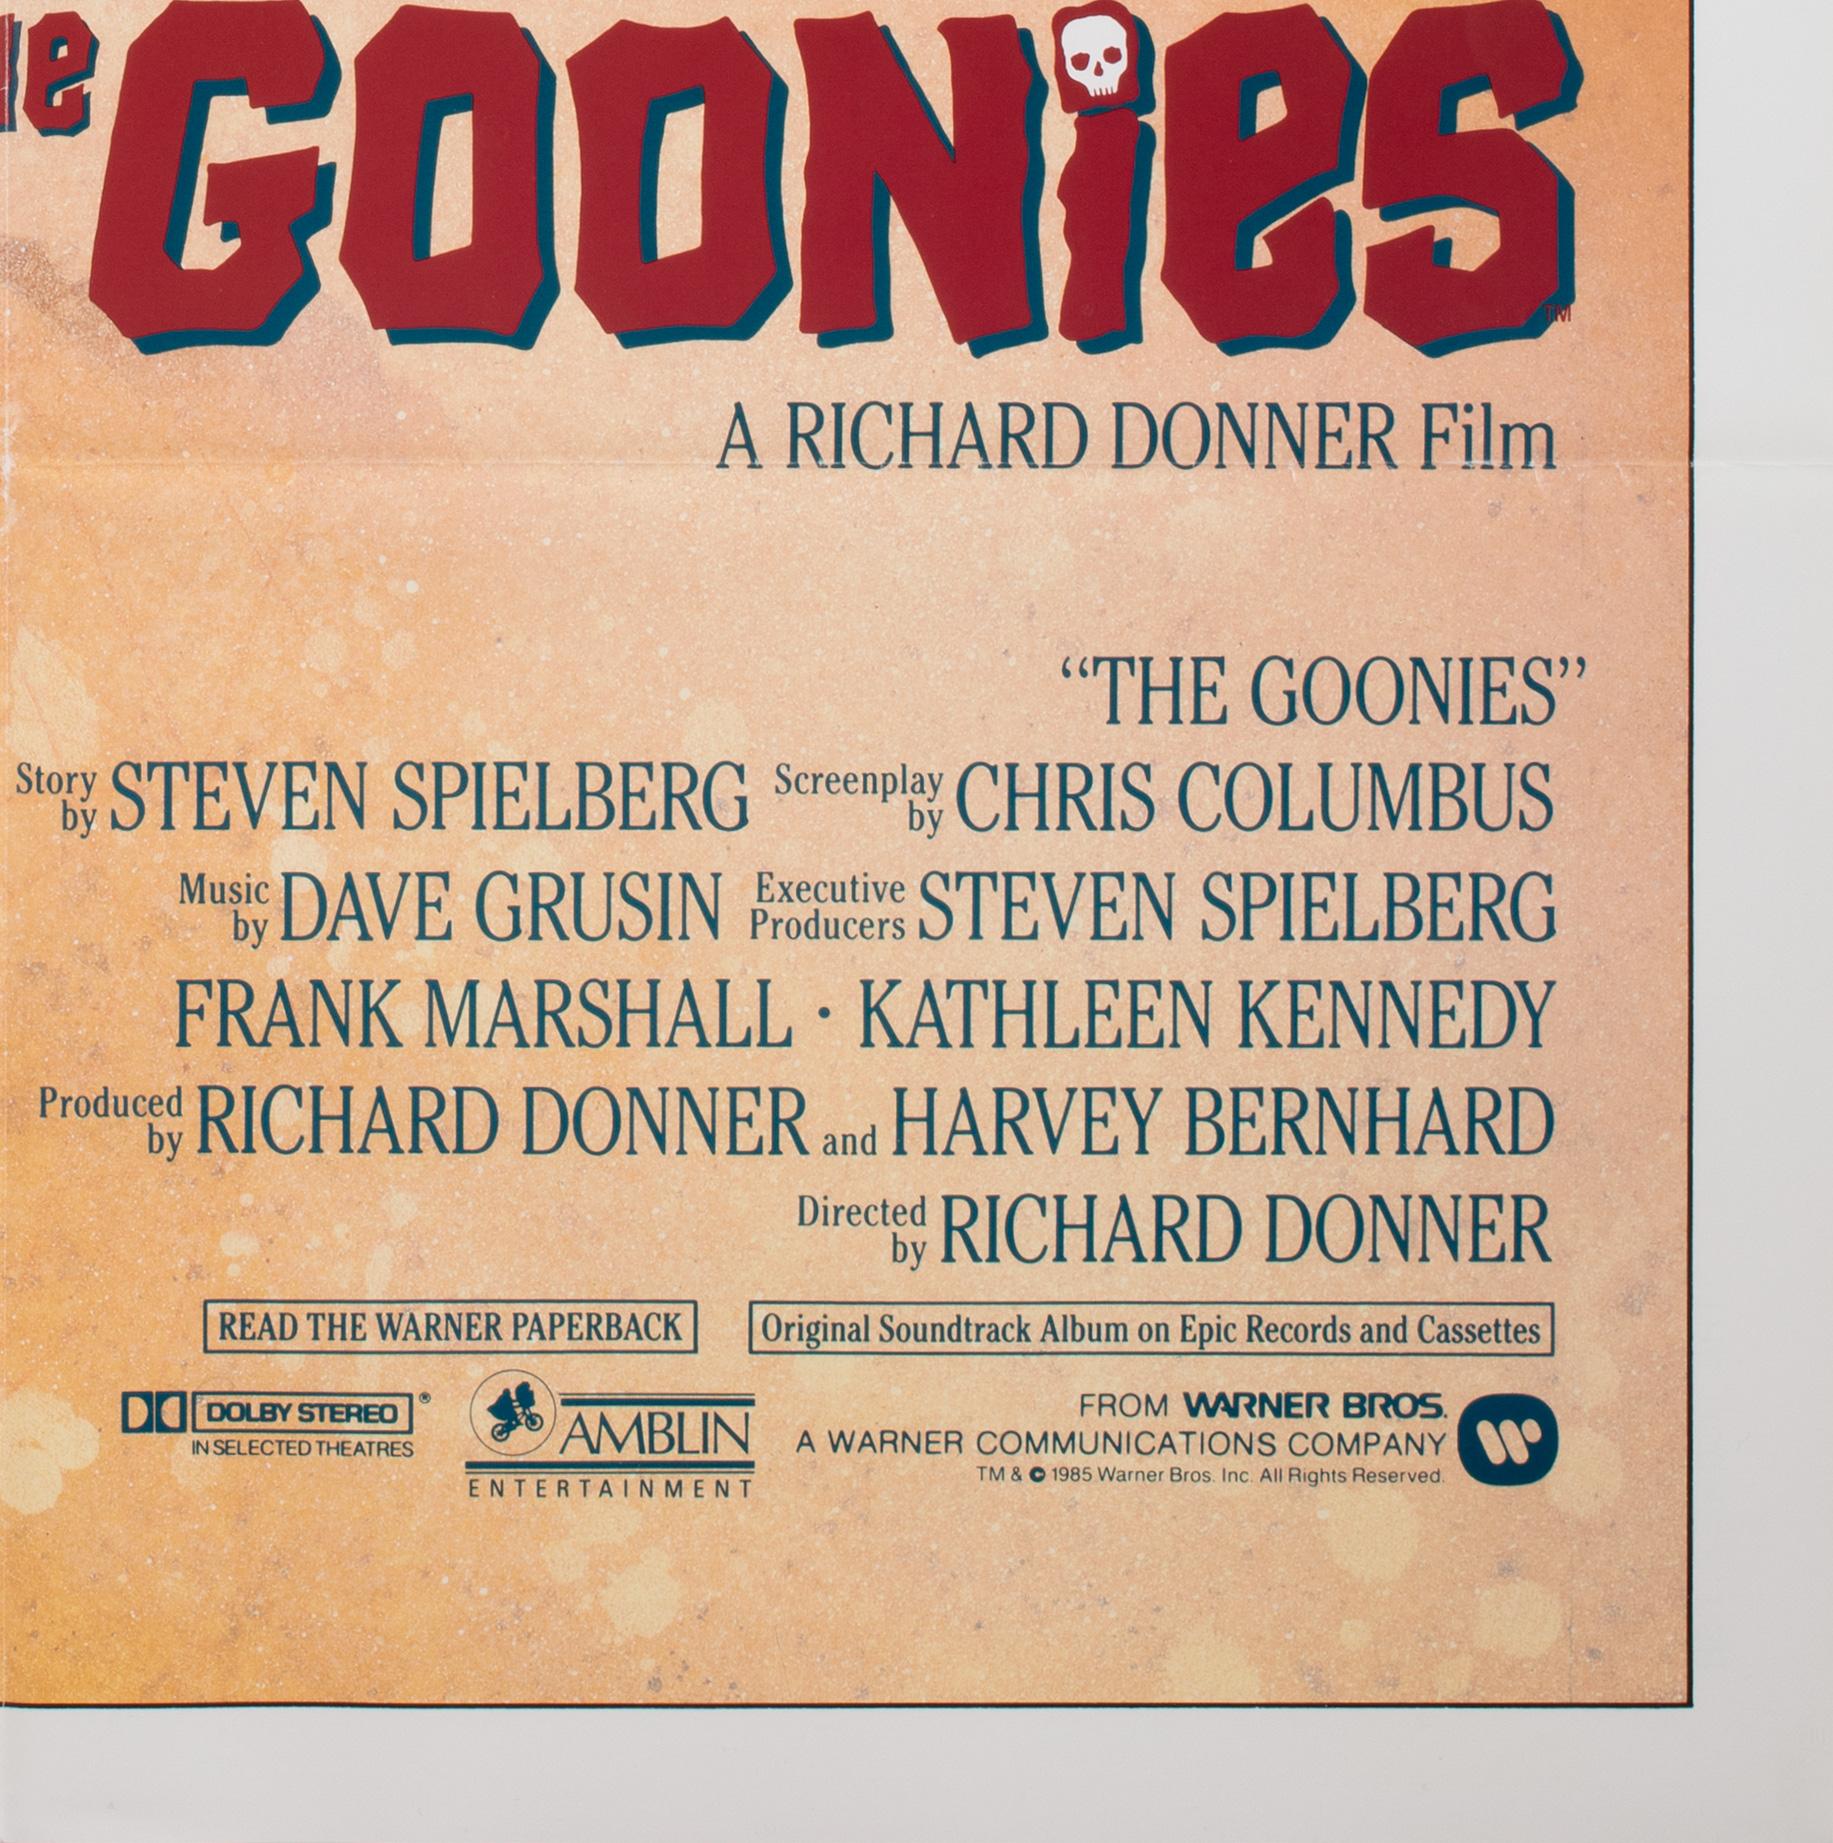 Linen The Goonies 1985 US 1 Sheet Film Movie Poster, DREW STRUZAN For Sale